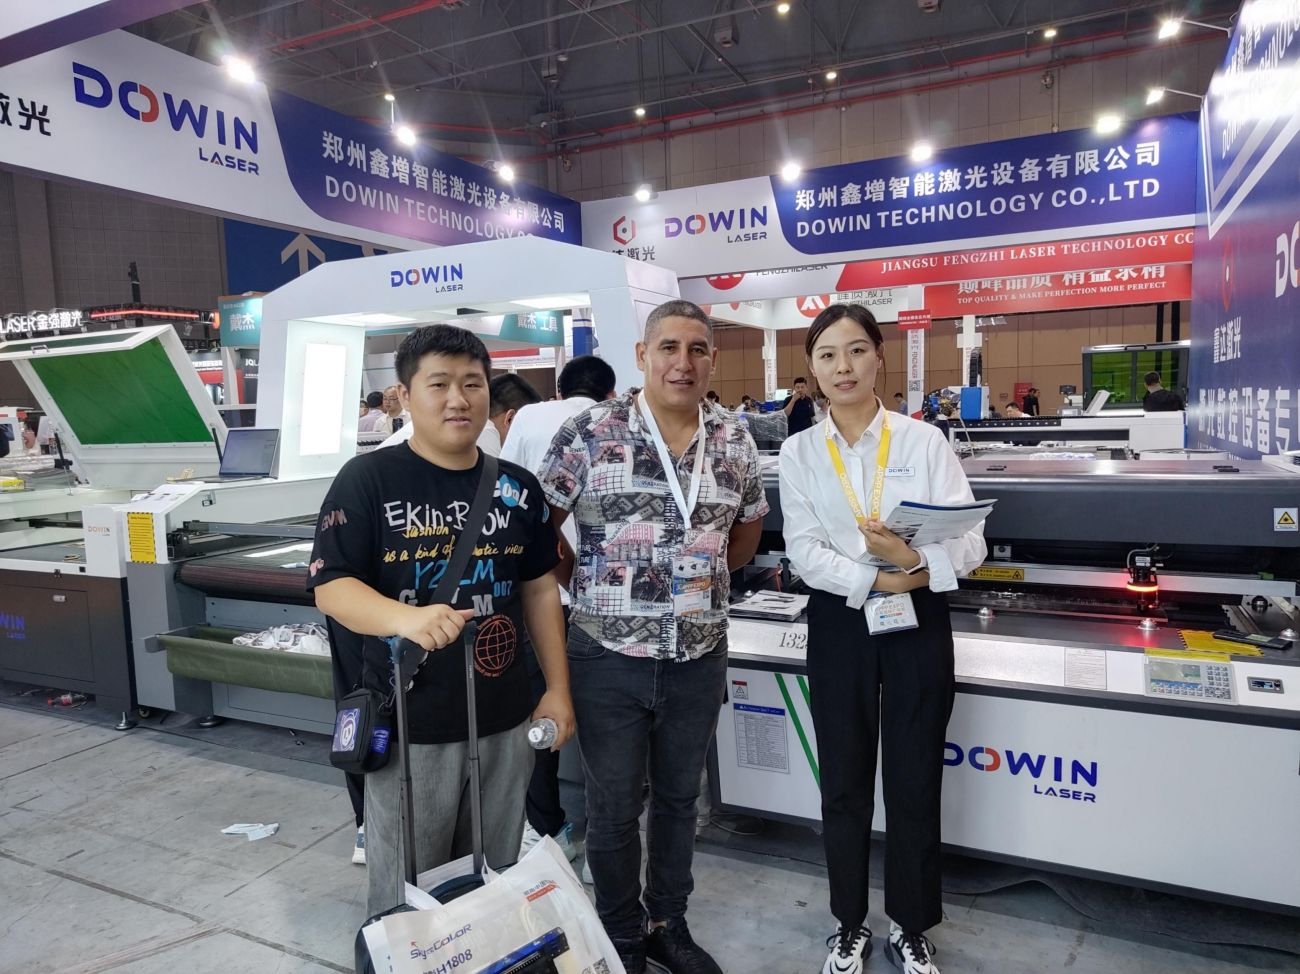 Dowin Technology Co., Ltd.had 7